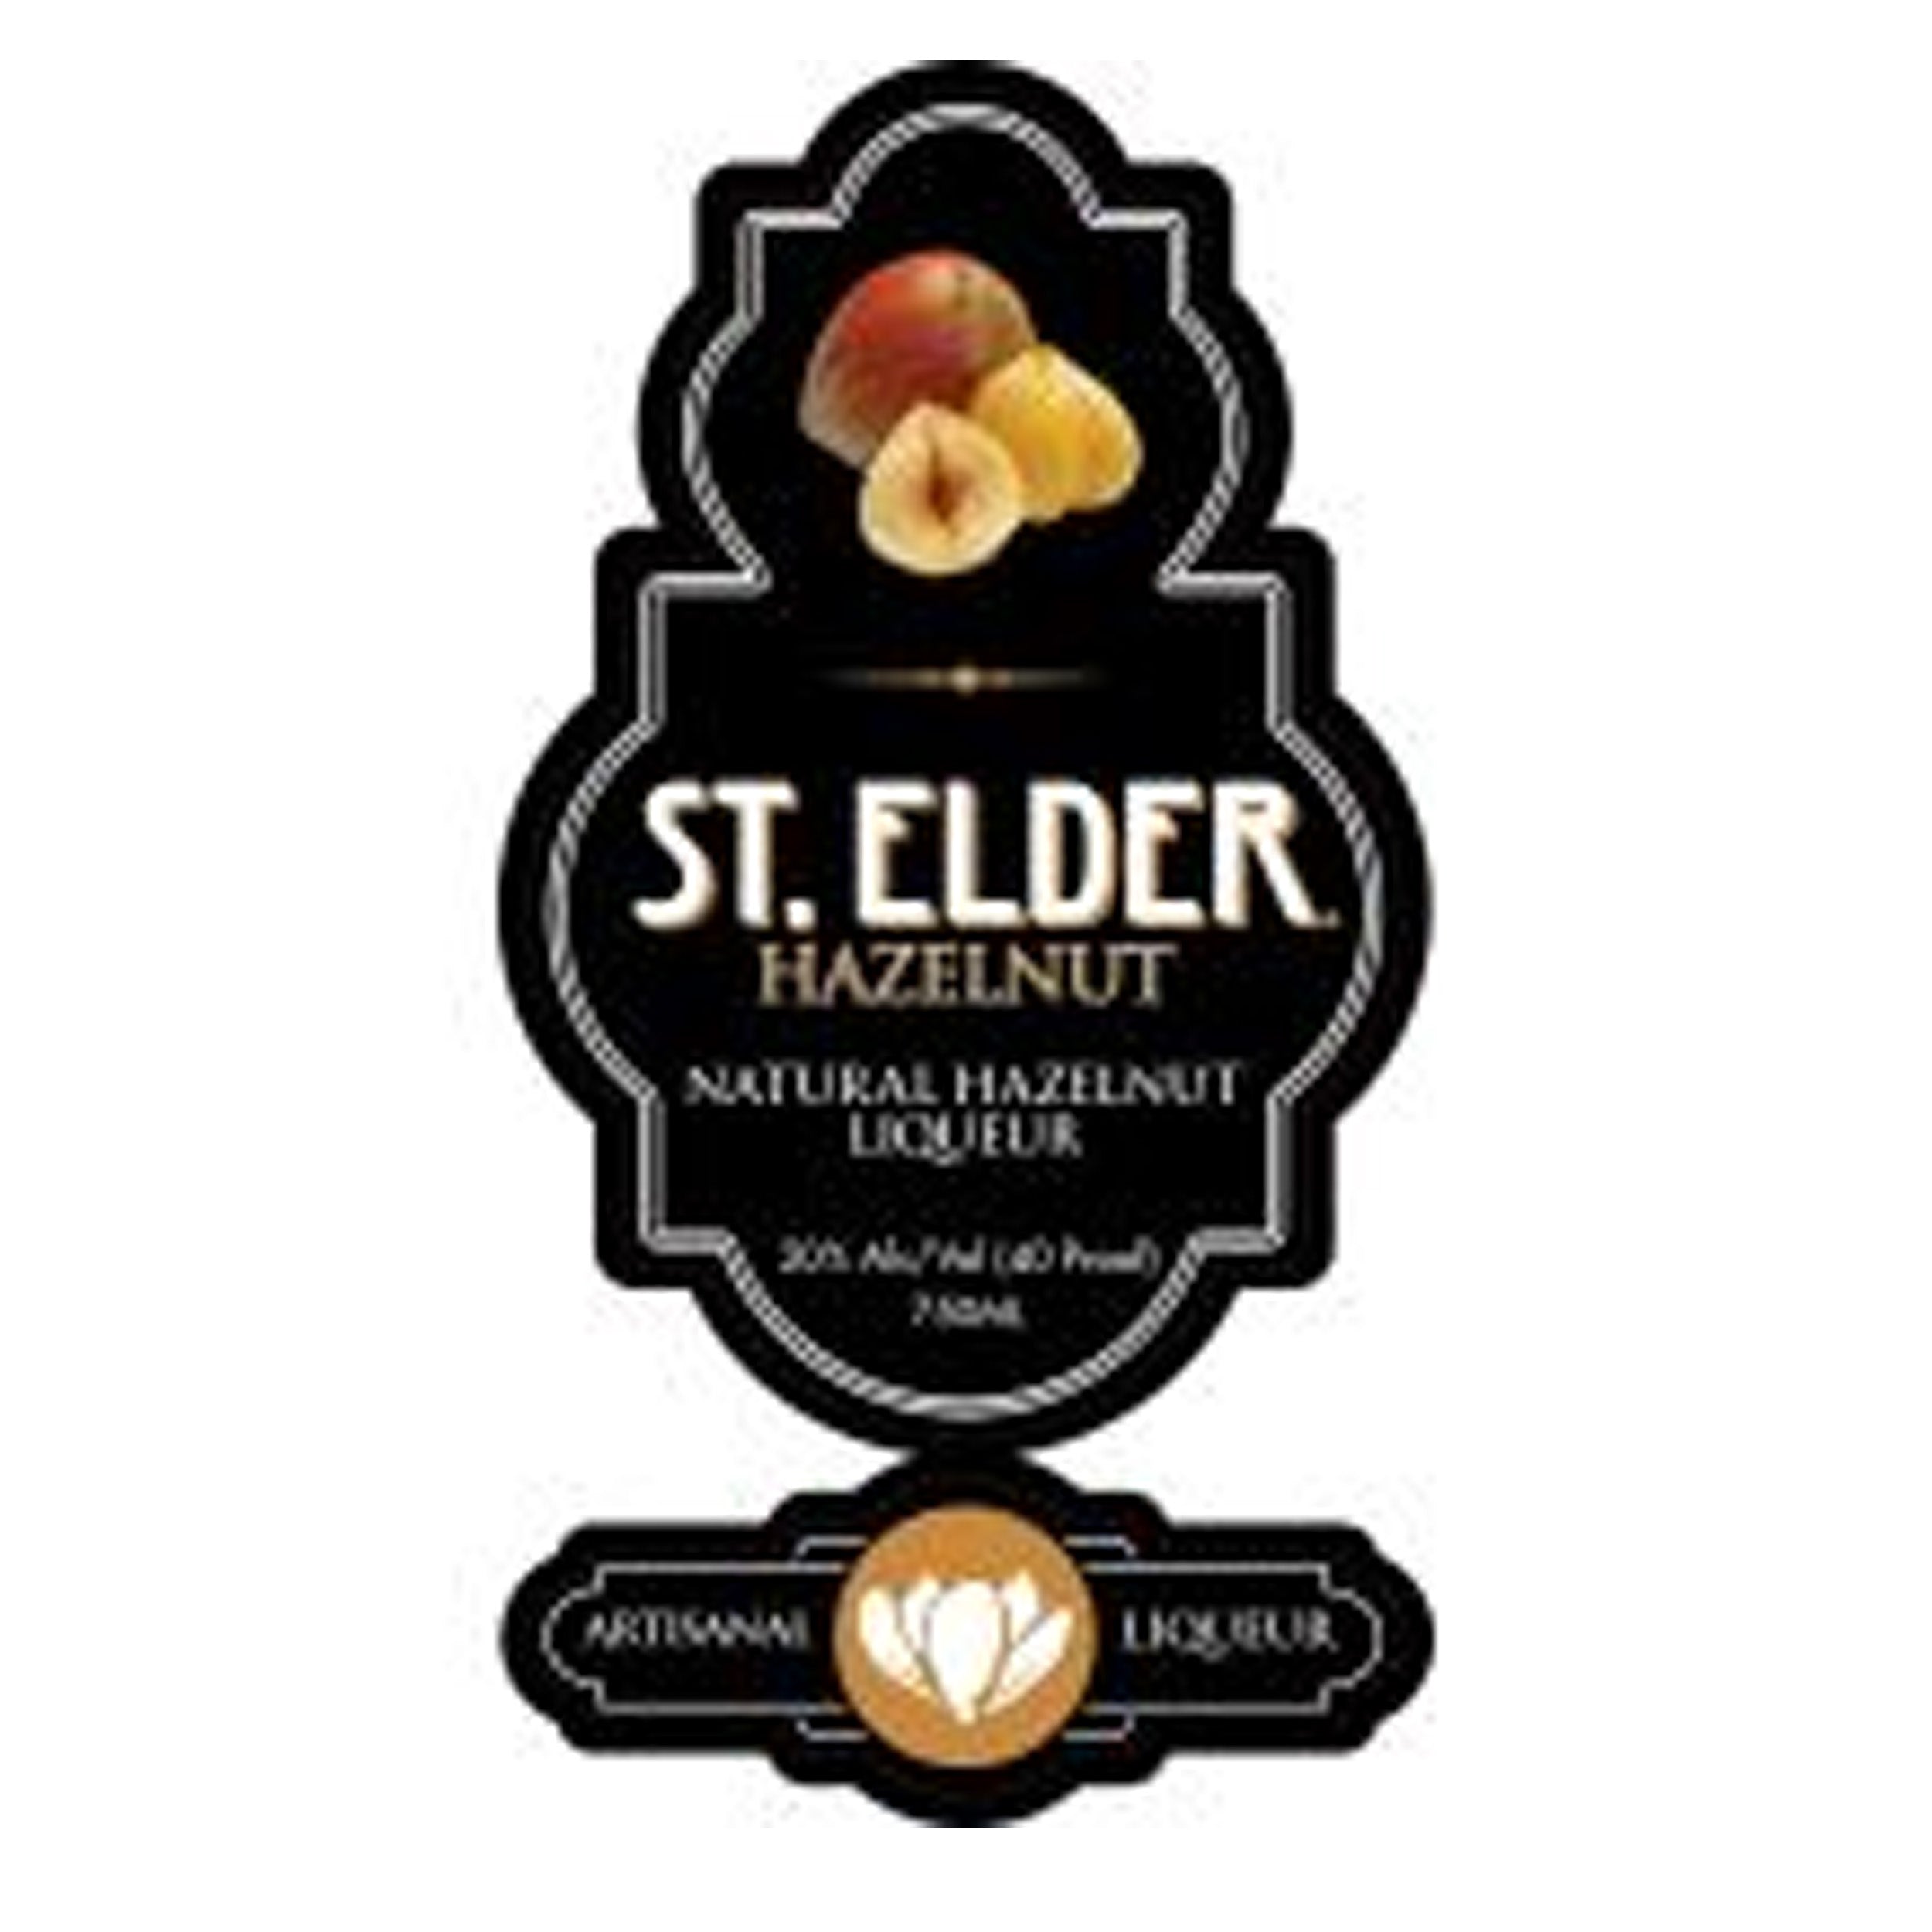 St. Elder Hazelnut Natural Liqueur